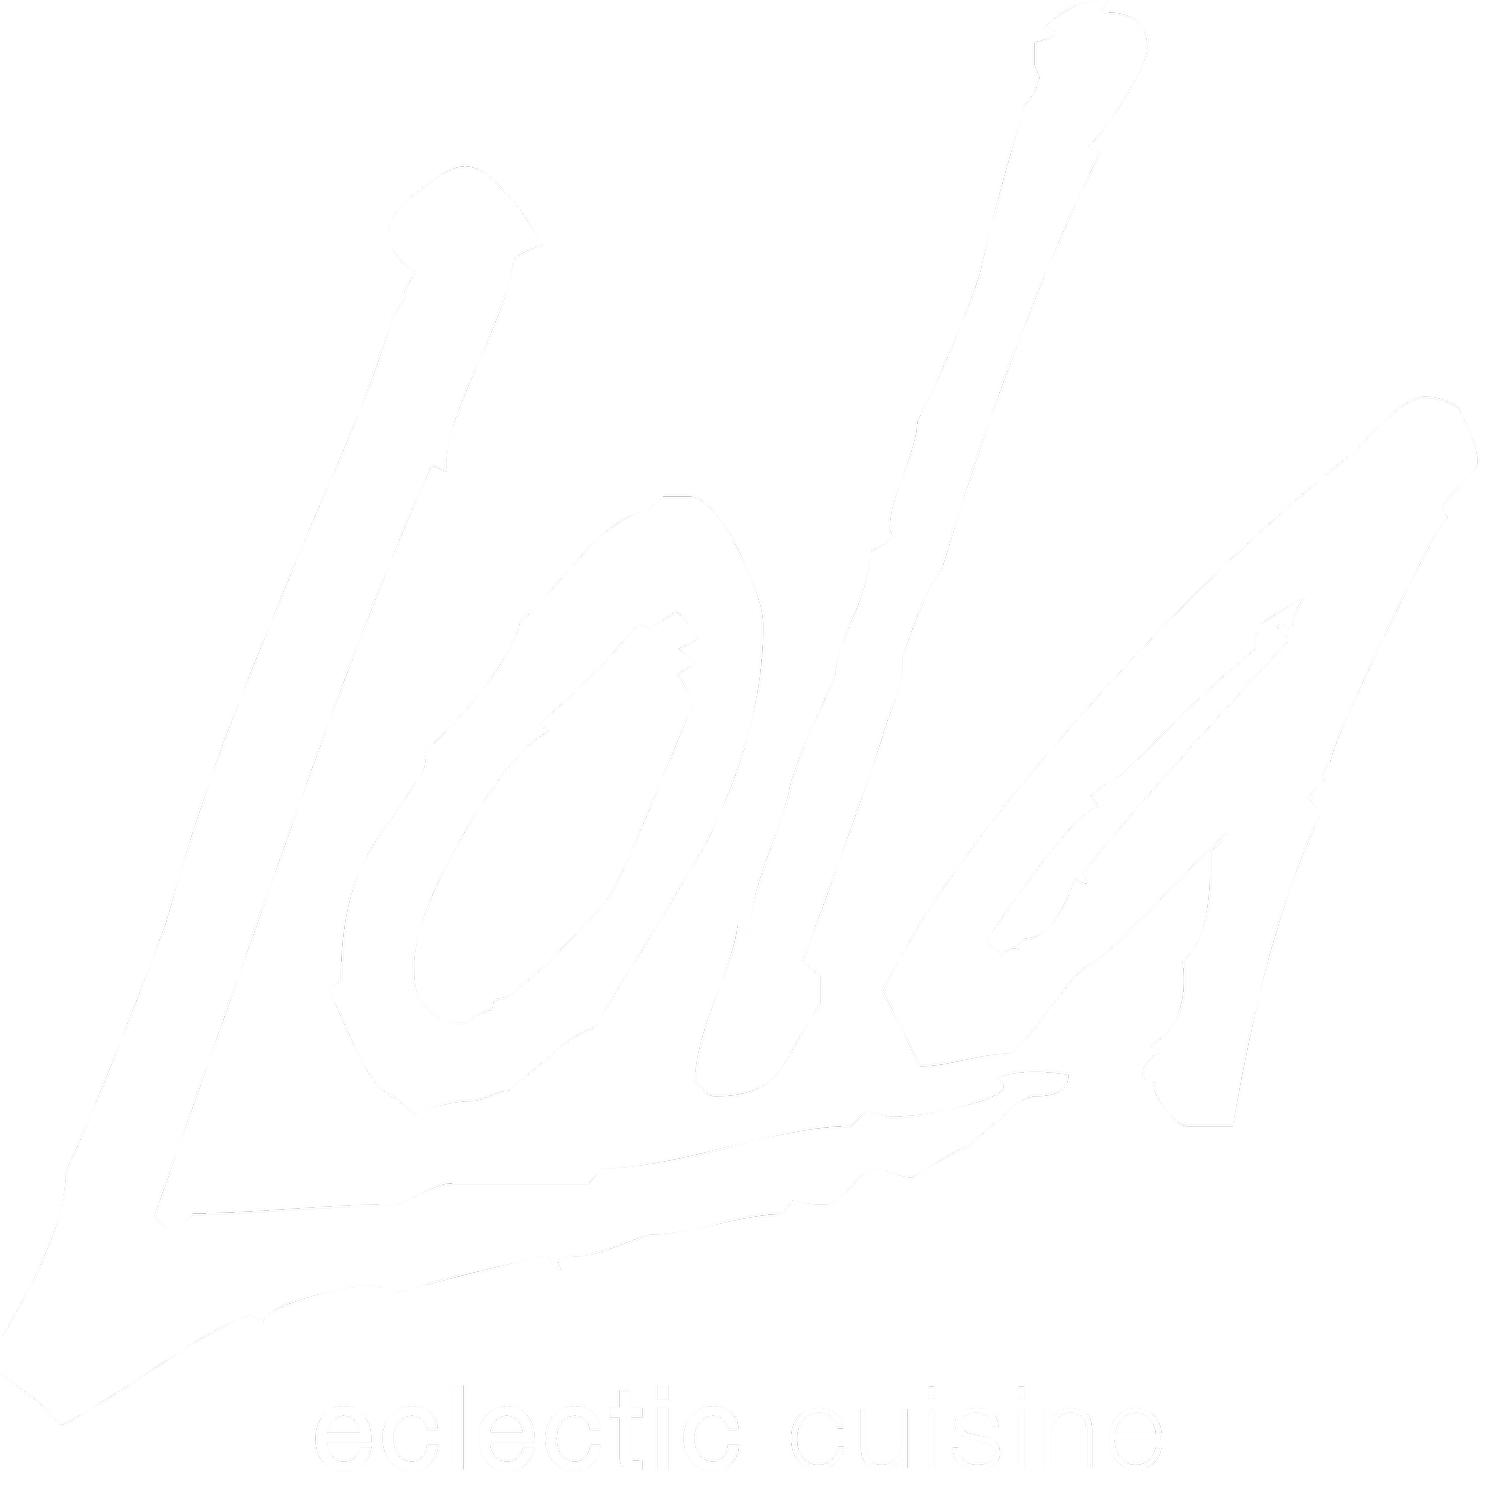 Lola Eclectic Cuisine 